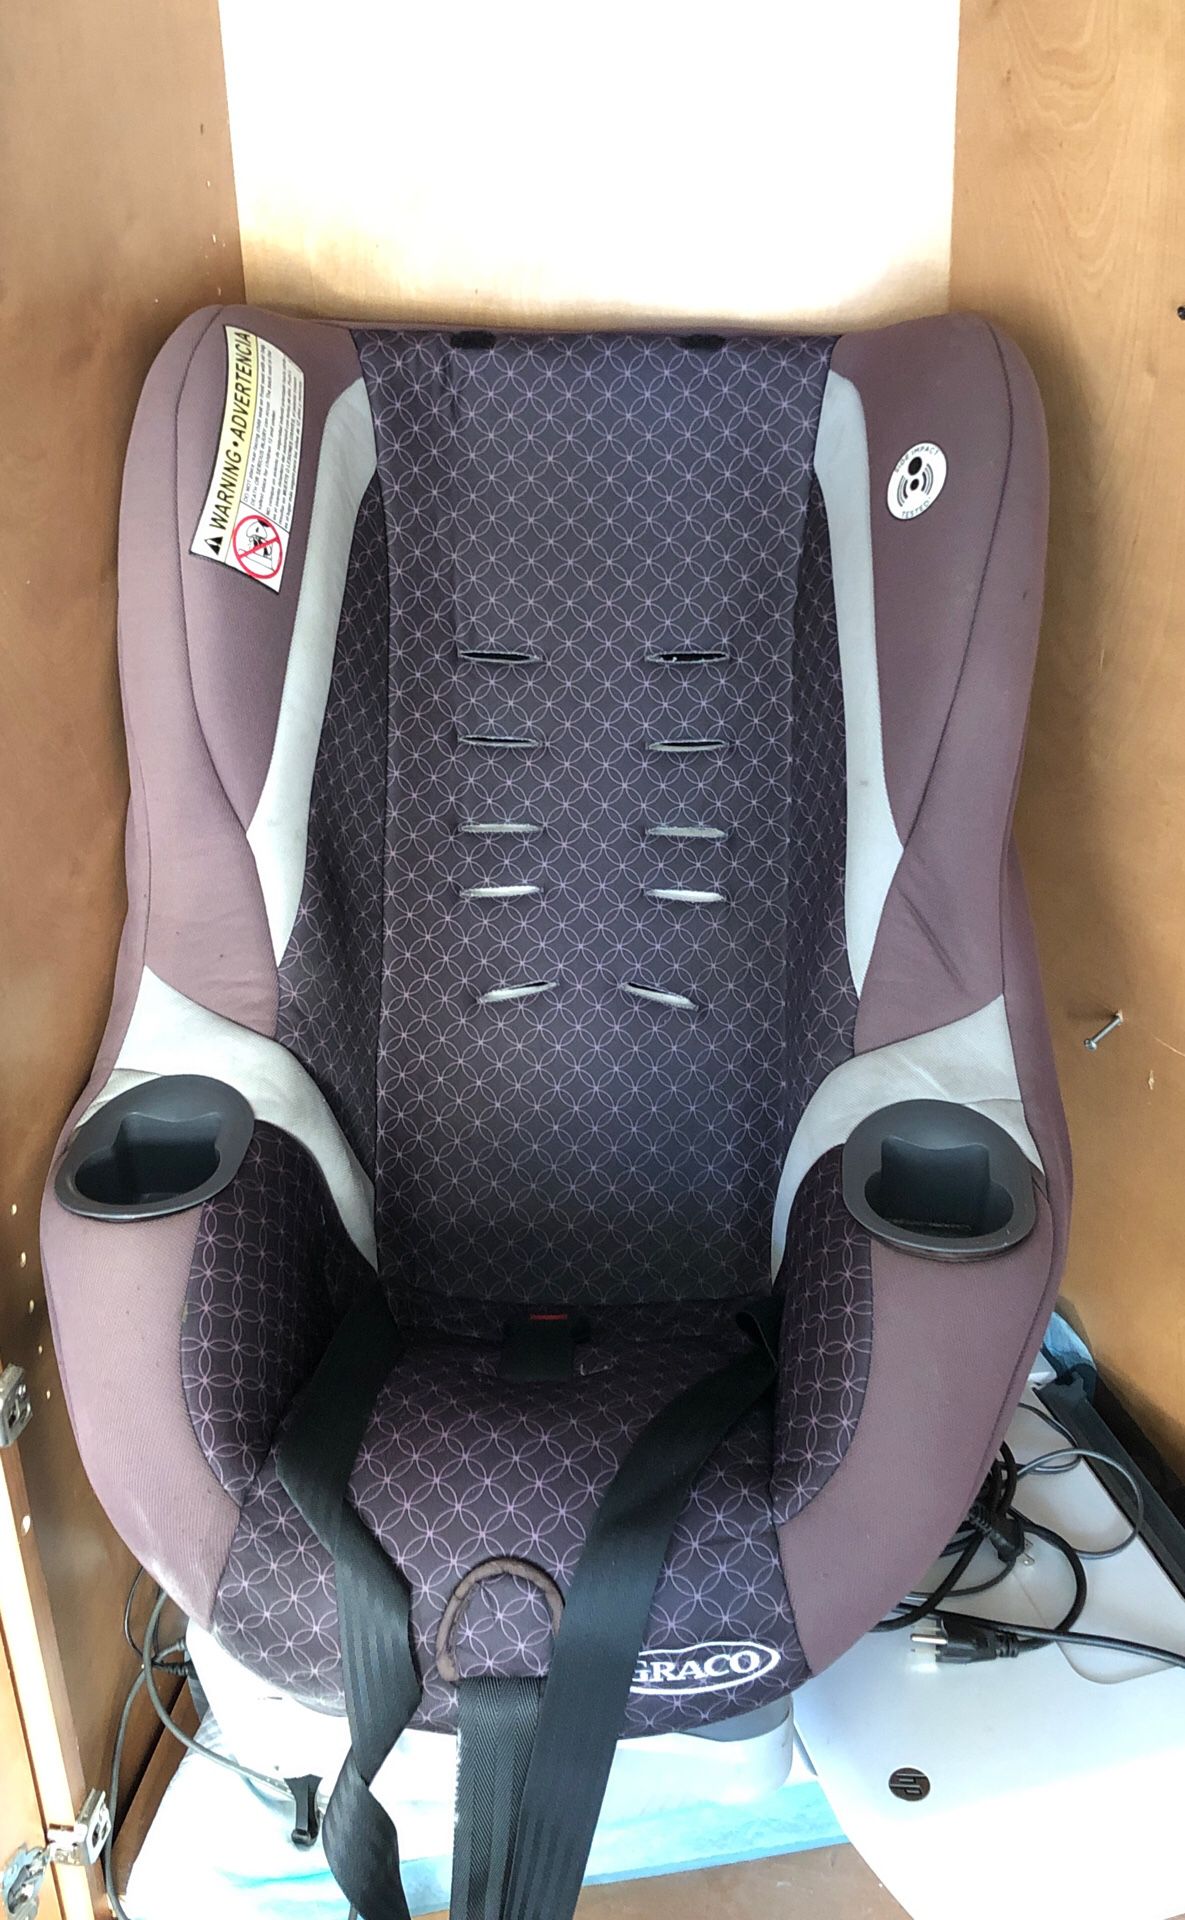 Gravo car seat for kid